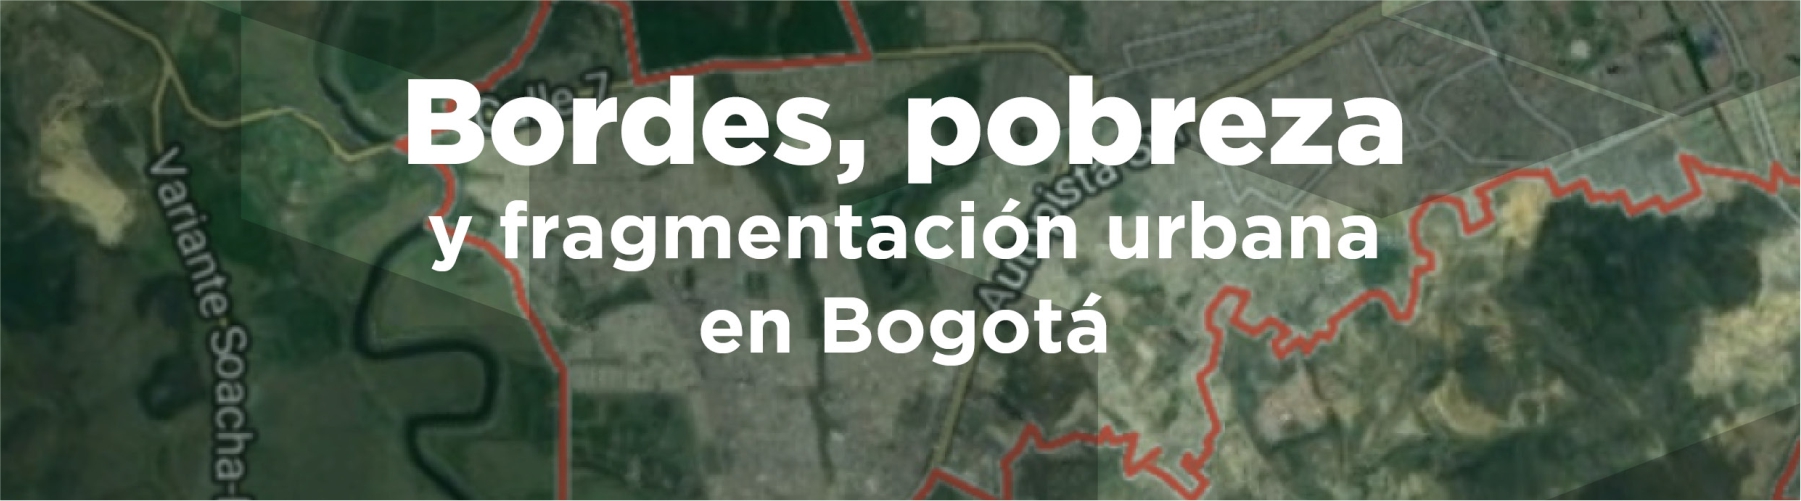 Coloquio Bordes, pobreza y fragmentación urbana